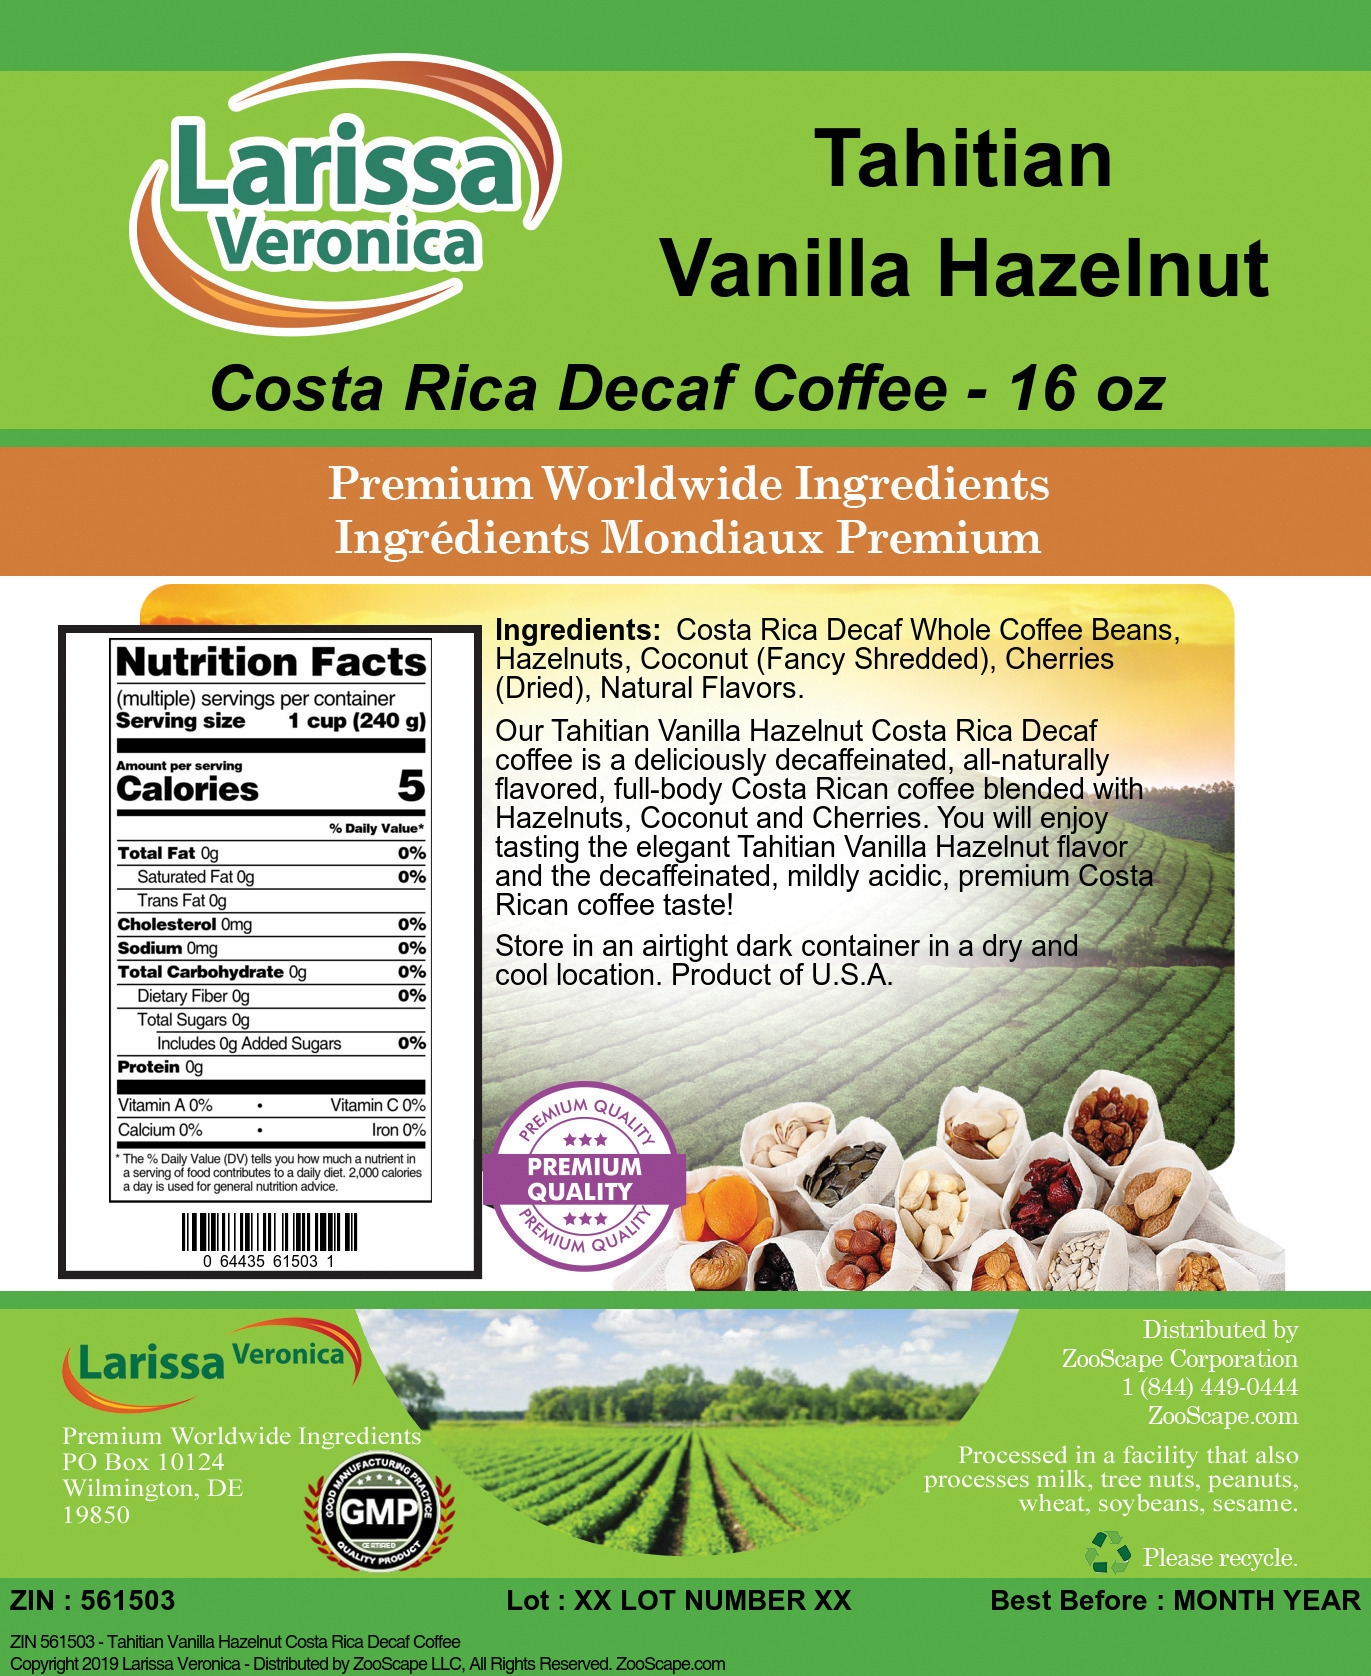 Tahitian Vanilla Hazelnut Costa Rica Decaf Coffee - Label